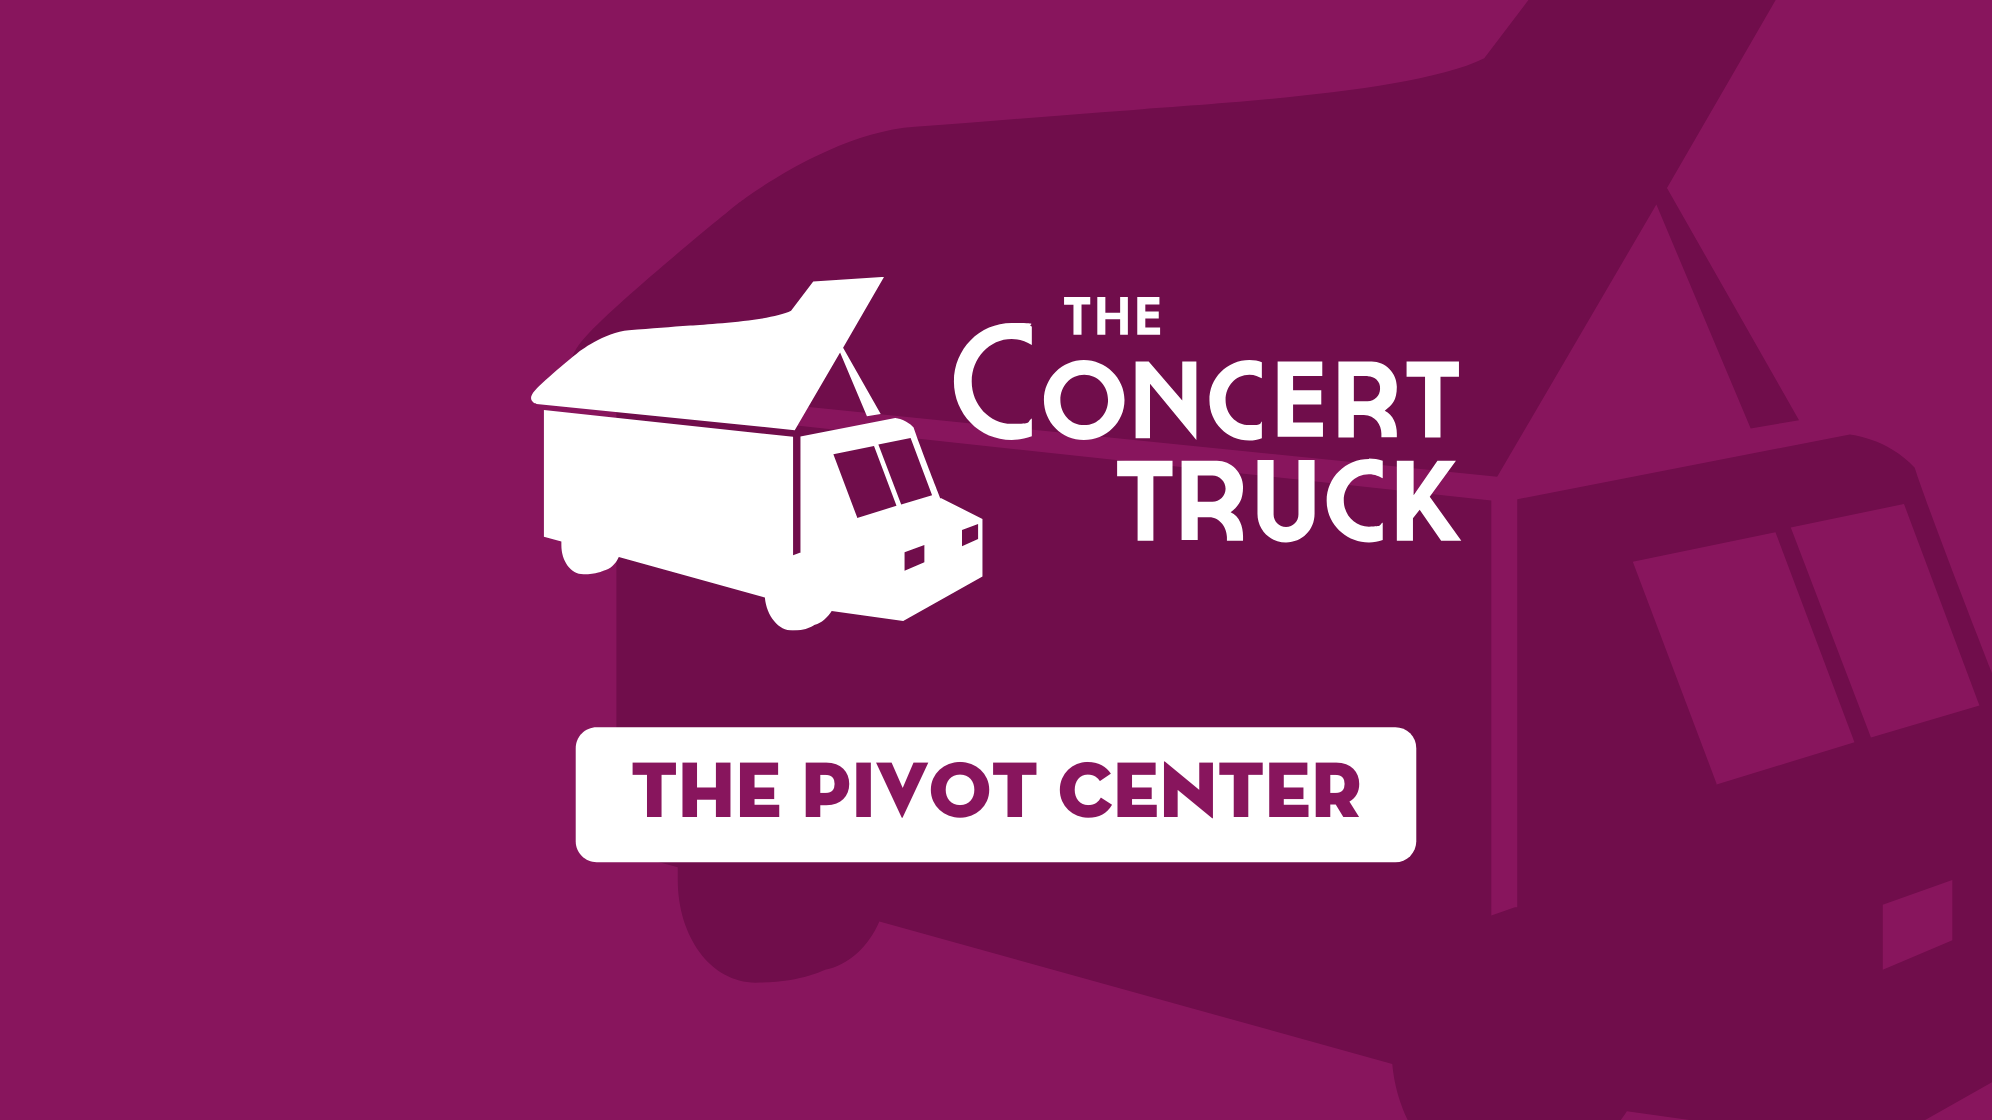 the concert truck logo